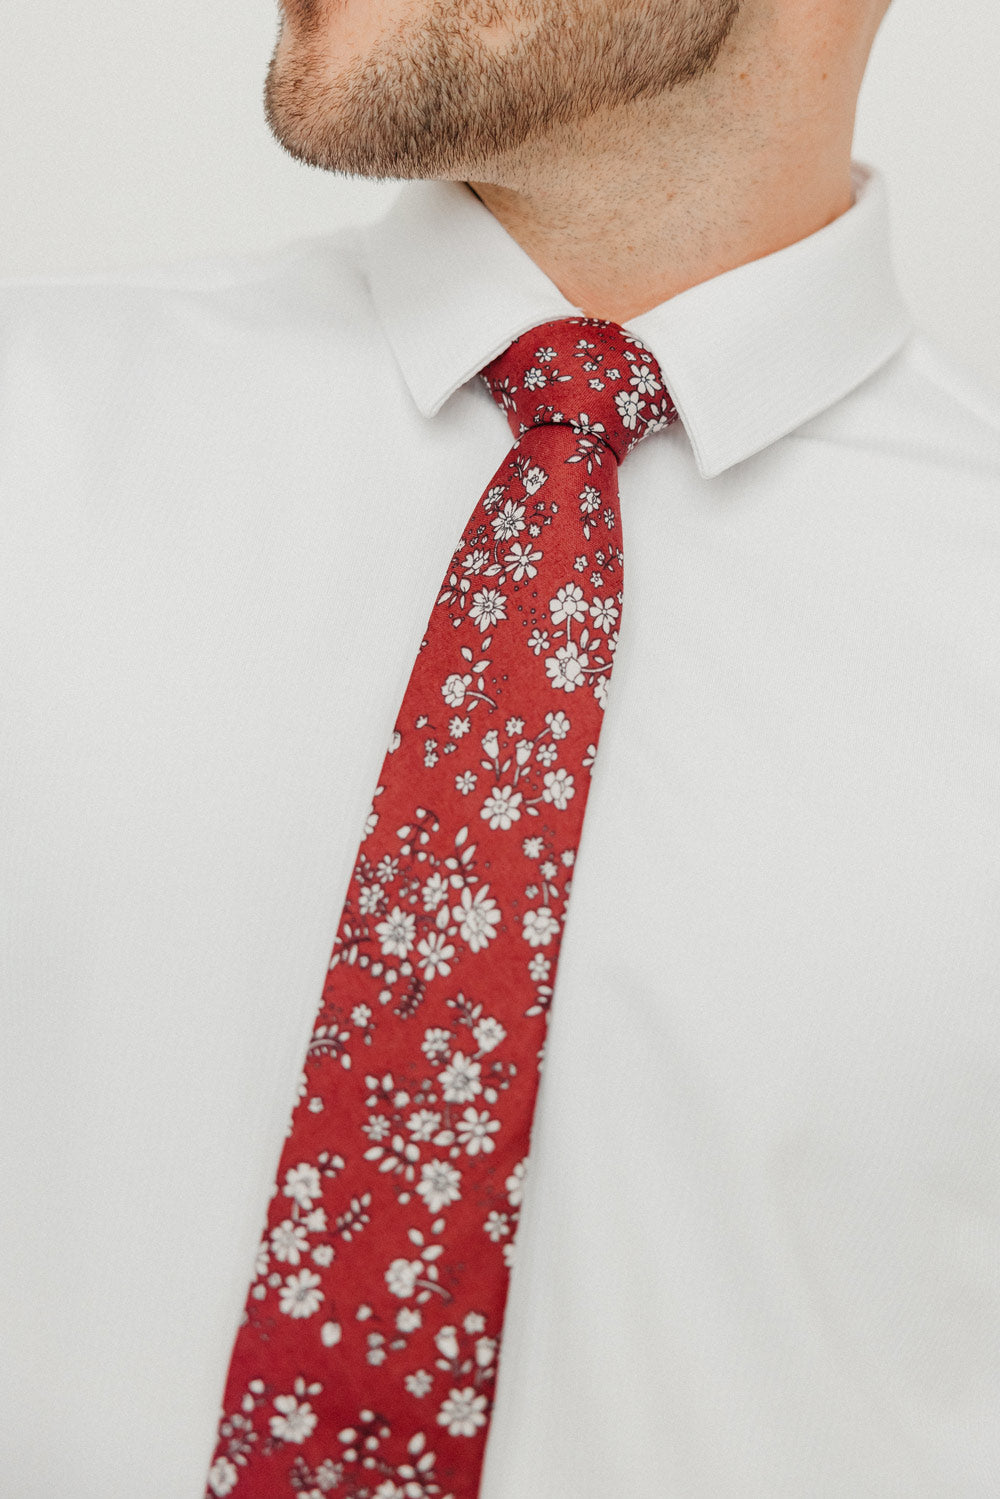 Mahogany tie worn with a white shirt.